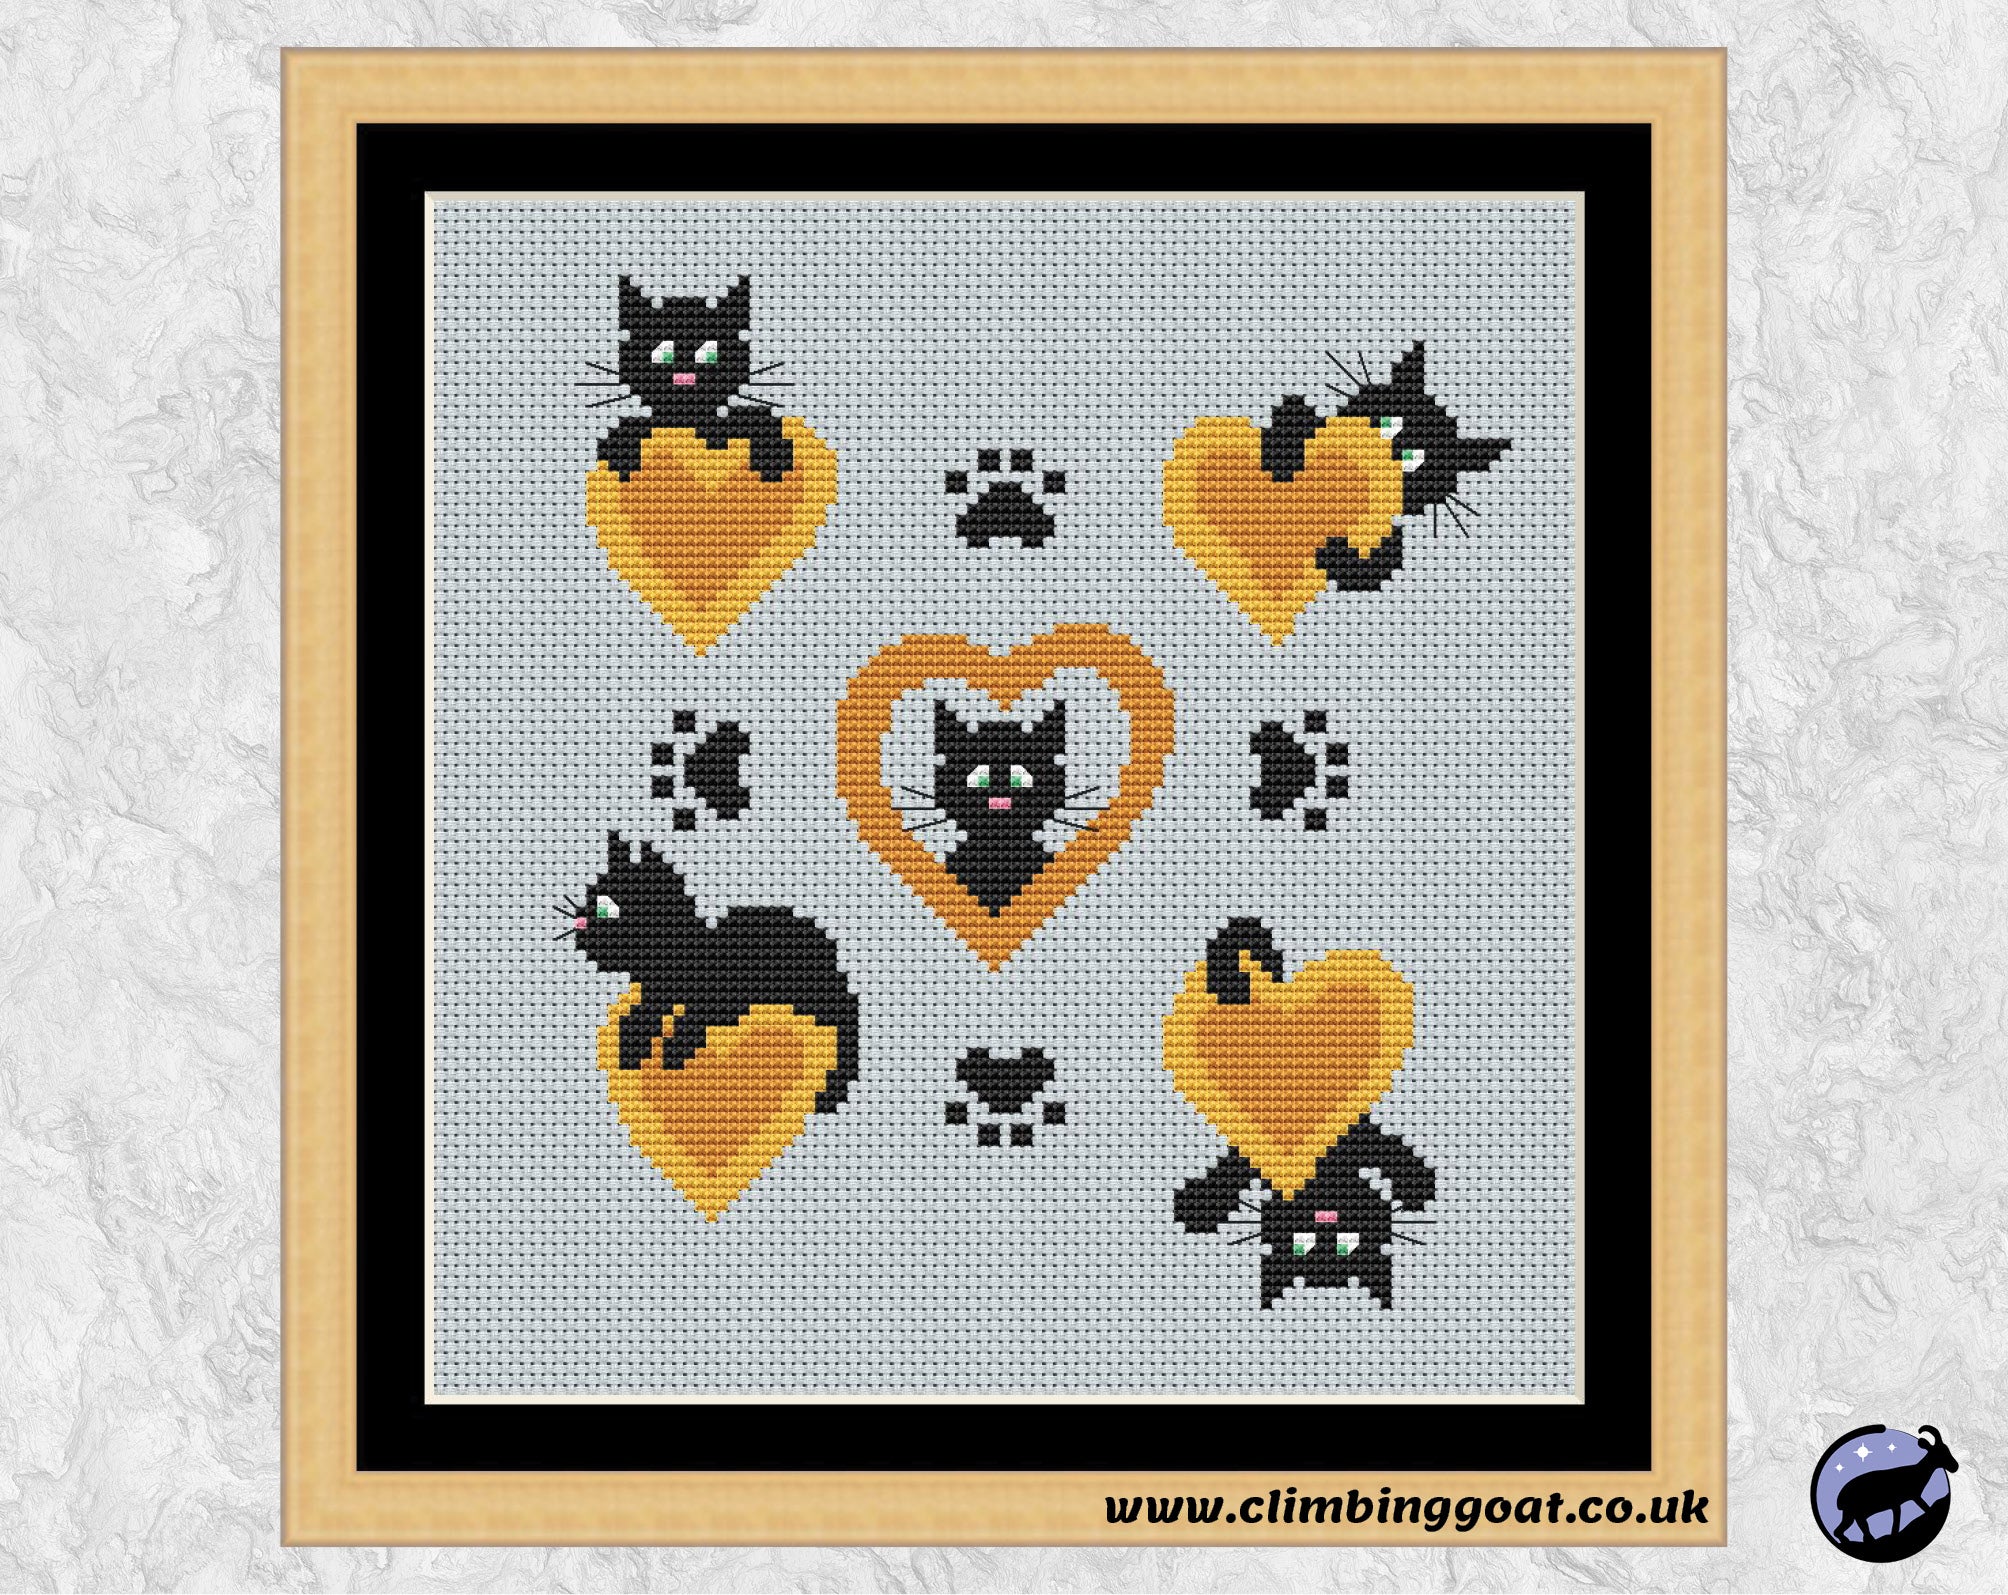 Peekaboo Cat Hearts cross stitch pattern. Cartoon cats peeking around golden hearts. Shown in frame.